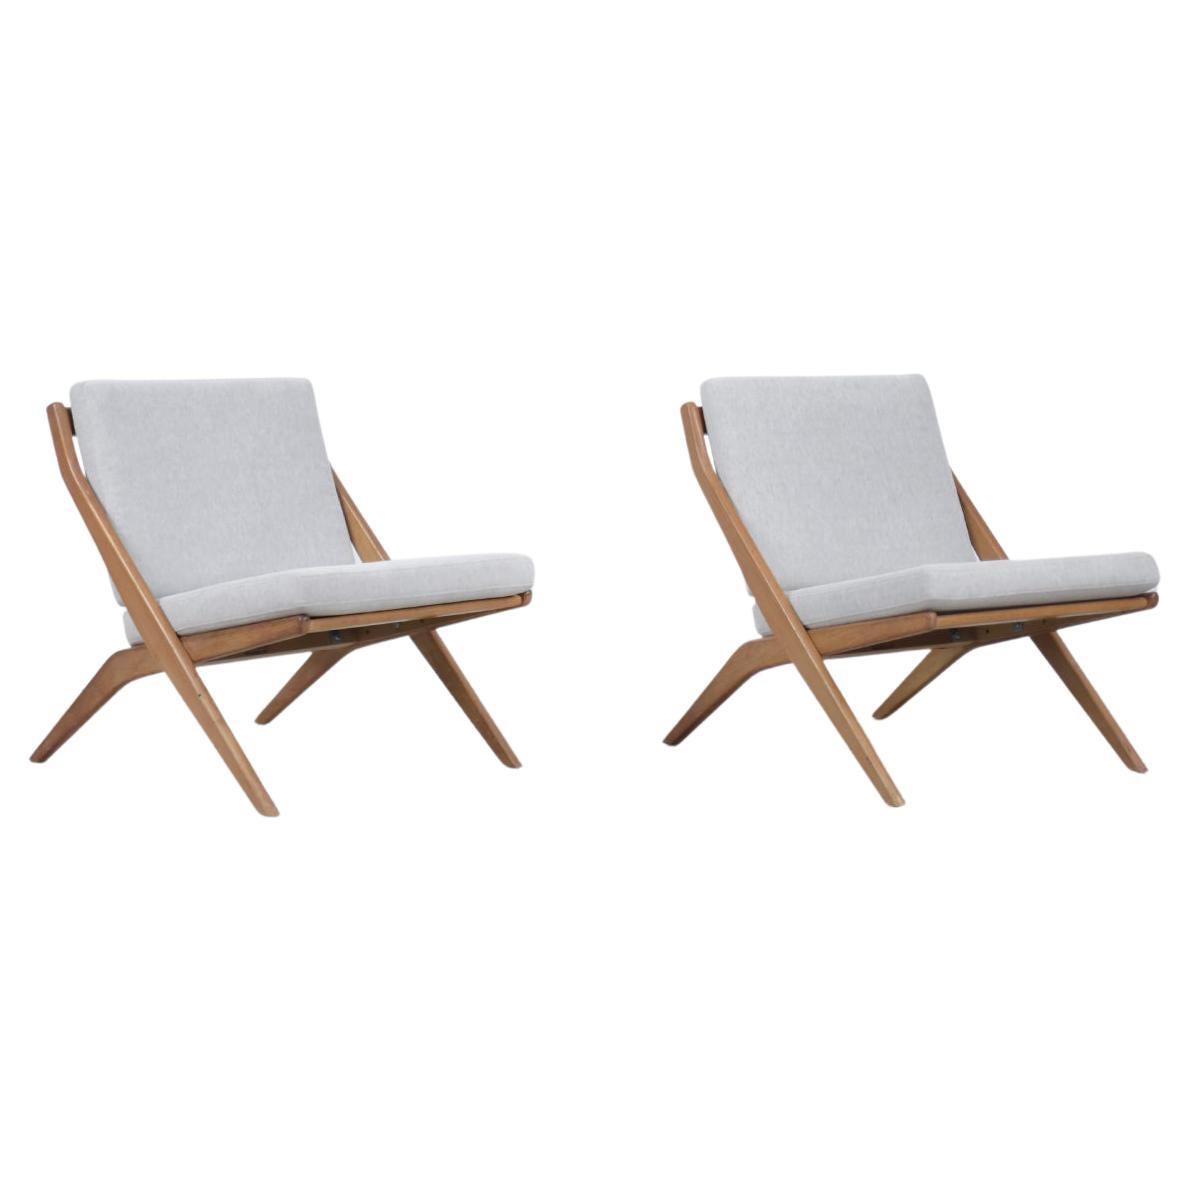 Pair of Mid-Century Modern Swedish Scissor Chairs by Folke Ohlsson for Bodafors